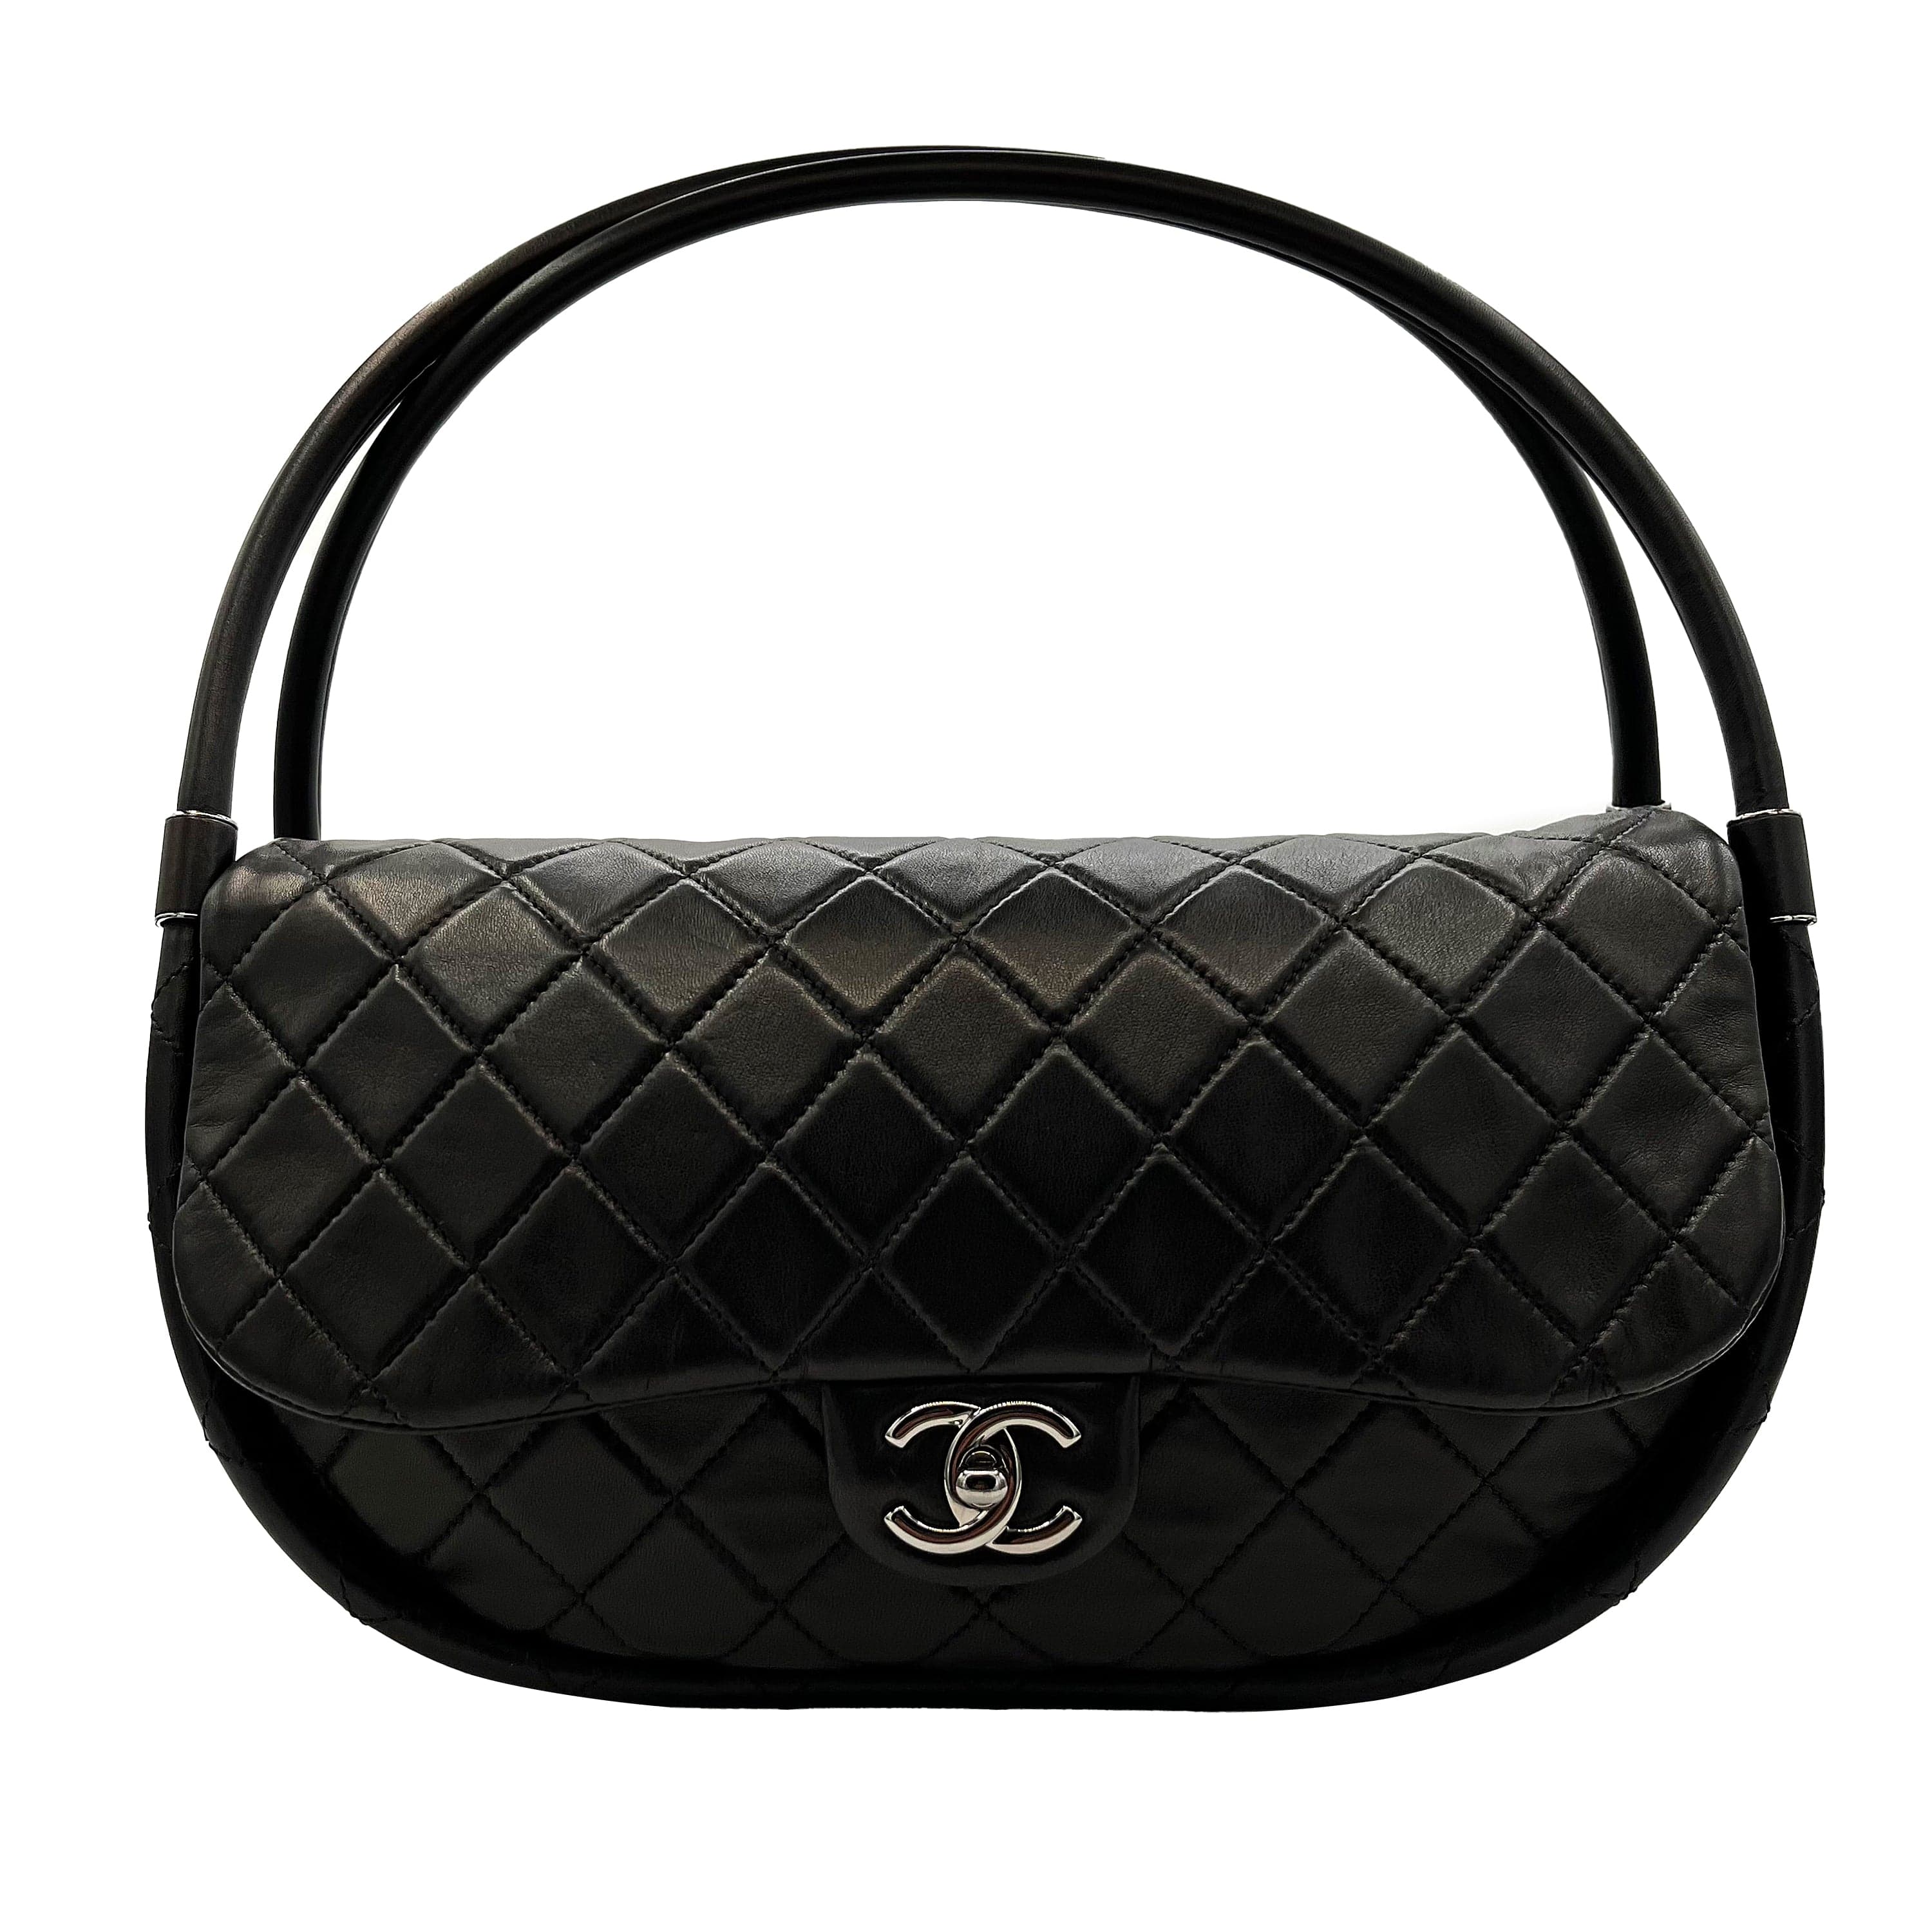 Chanel CHANEL HULA HOOP CROSS HAND BAG BLACK LAMB SKIN 90219238